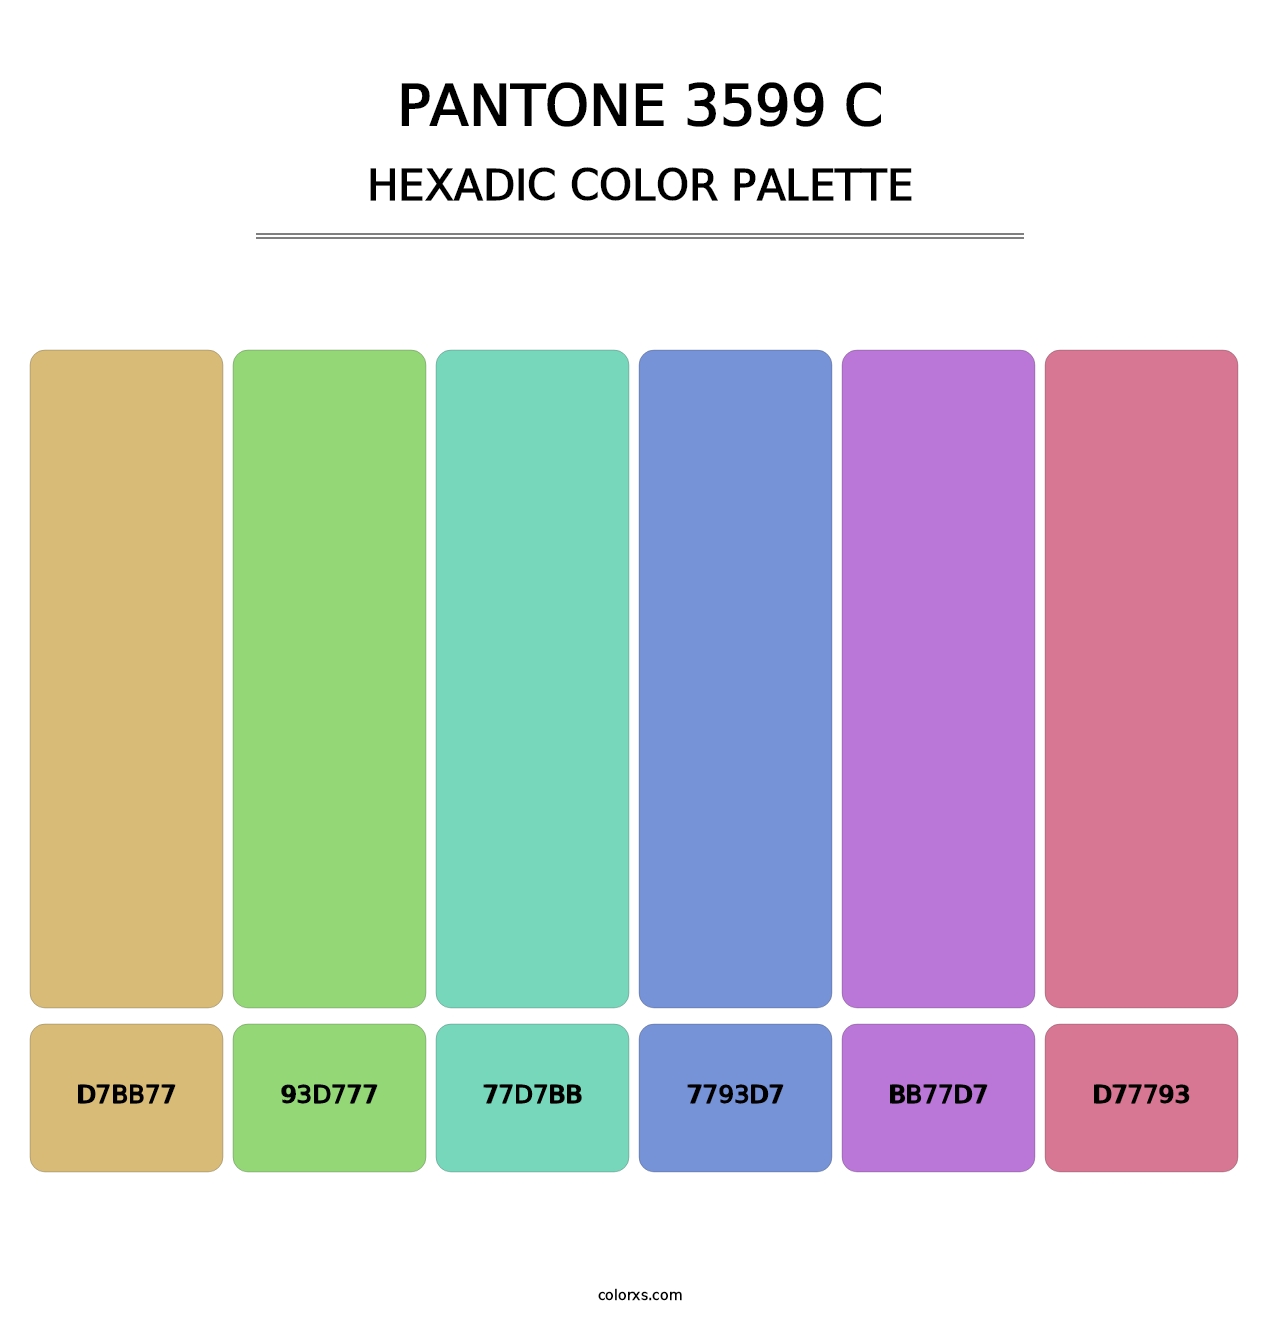 PANTONE 3599 C - Hexadic Color Palette